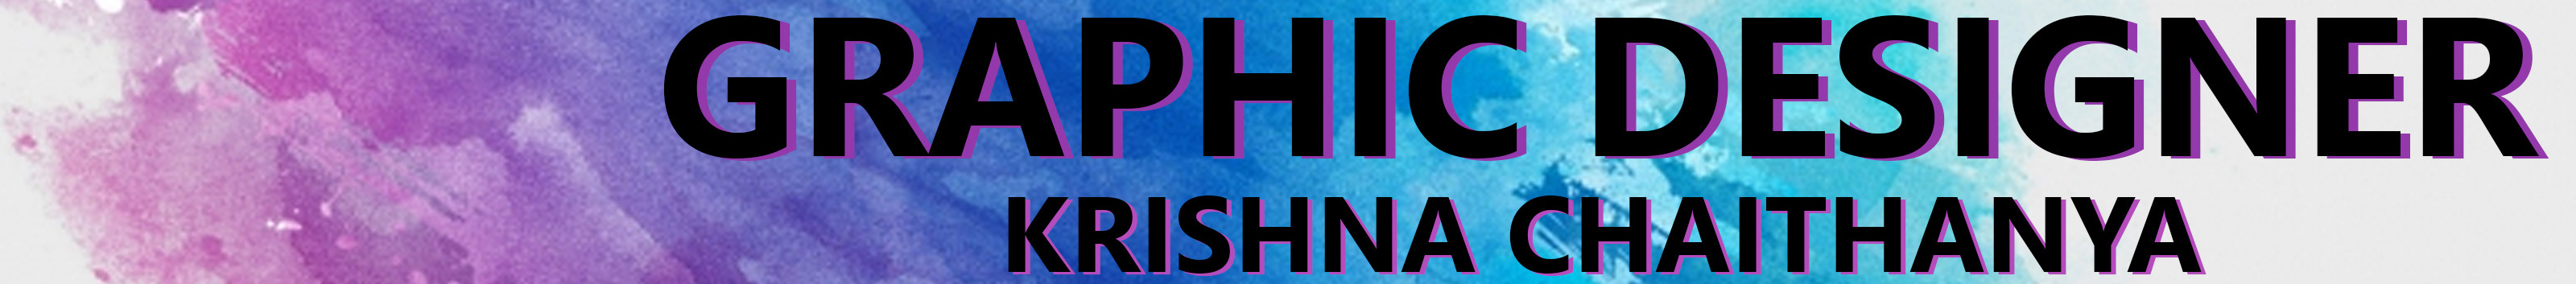 Krishna Chaithanya's profile banner